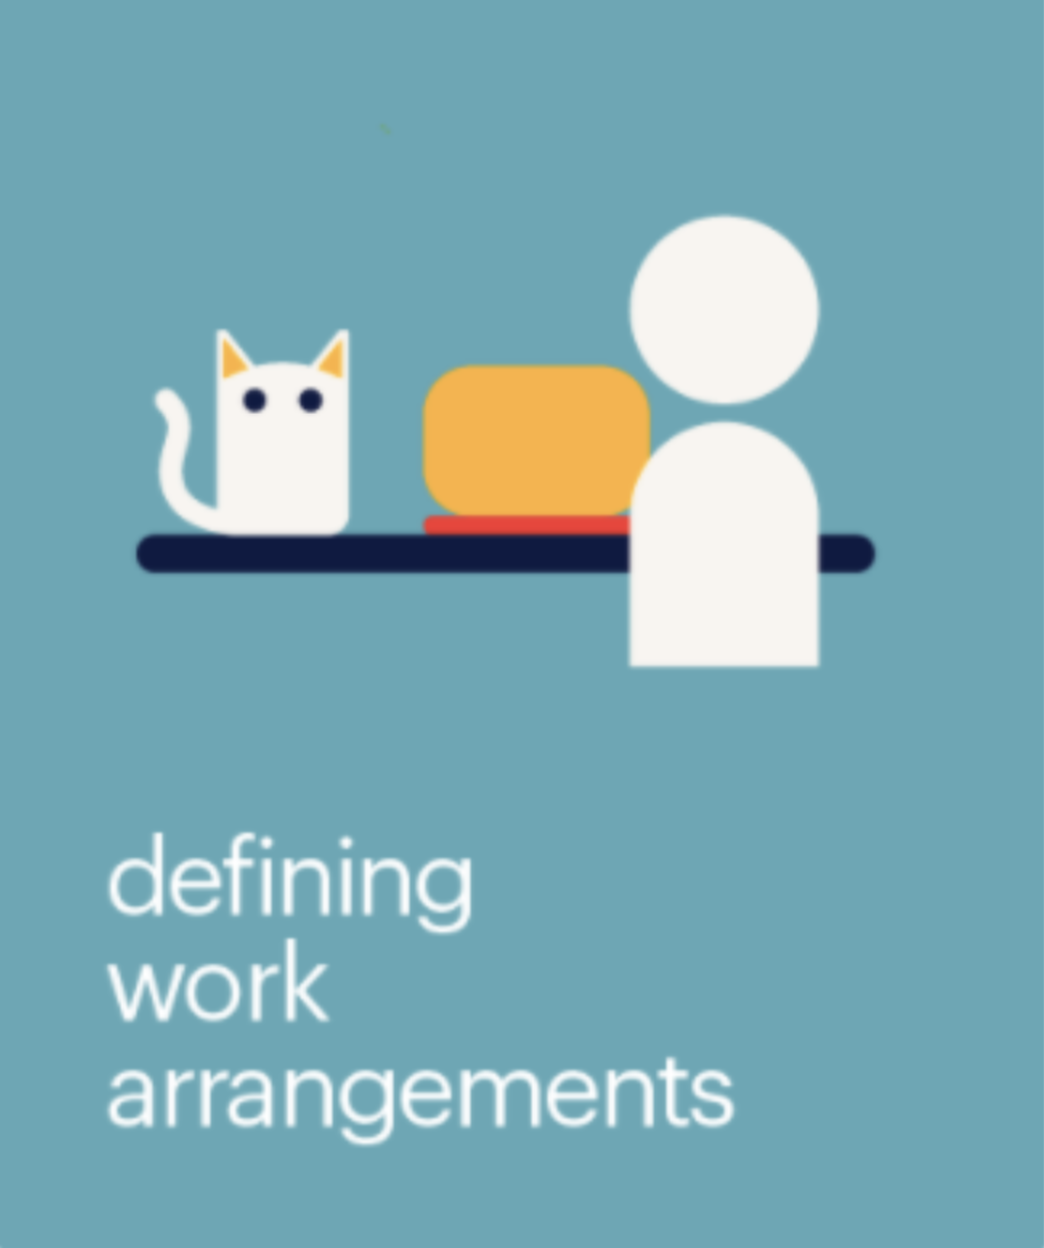 defining-work-arrangements-covid-19.png